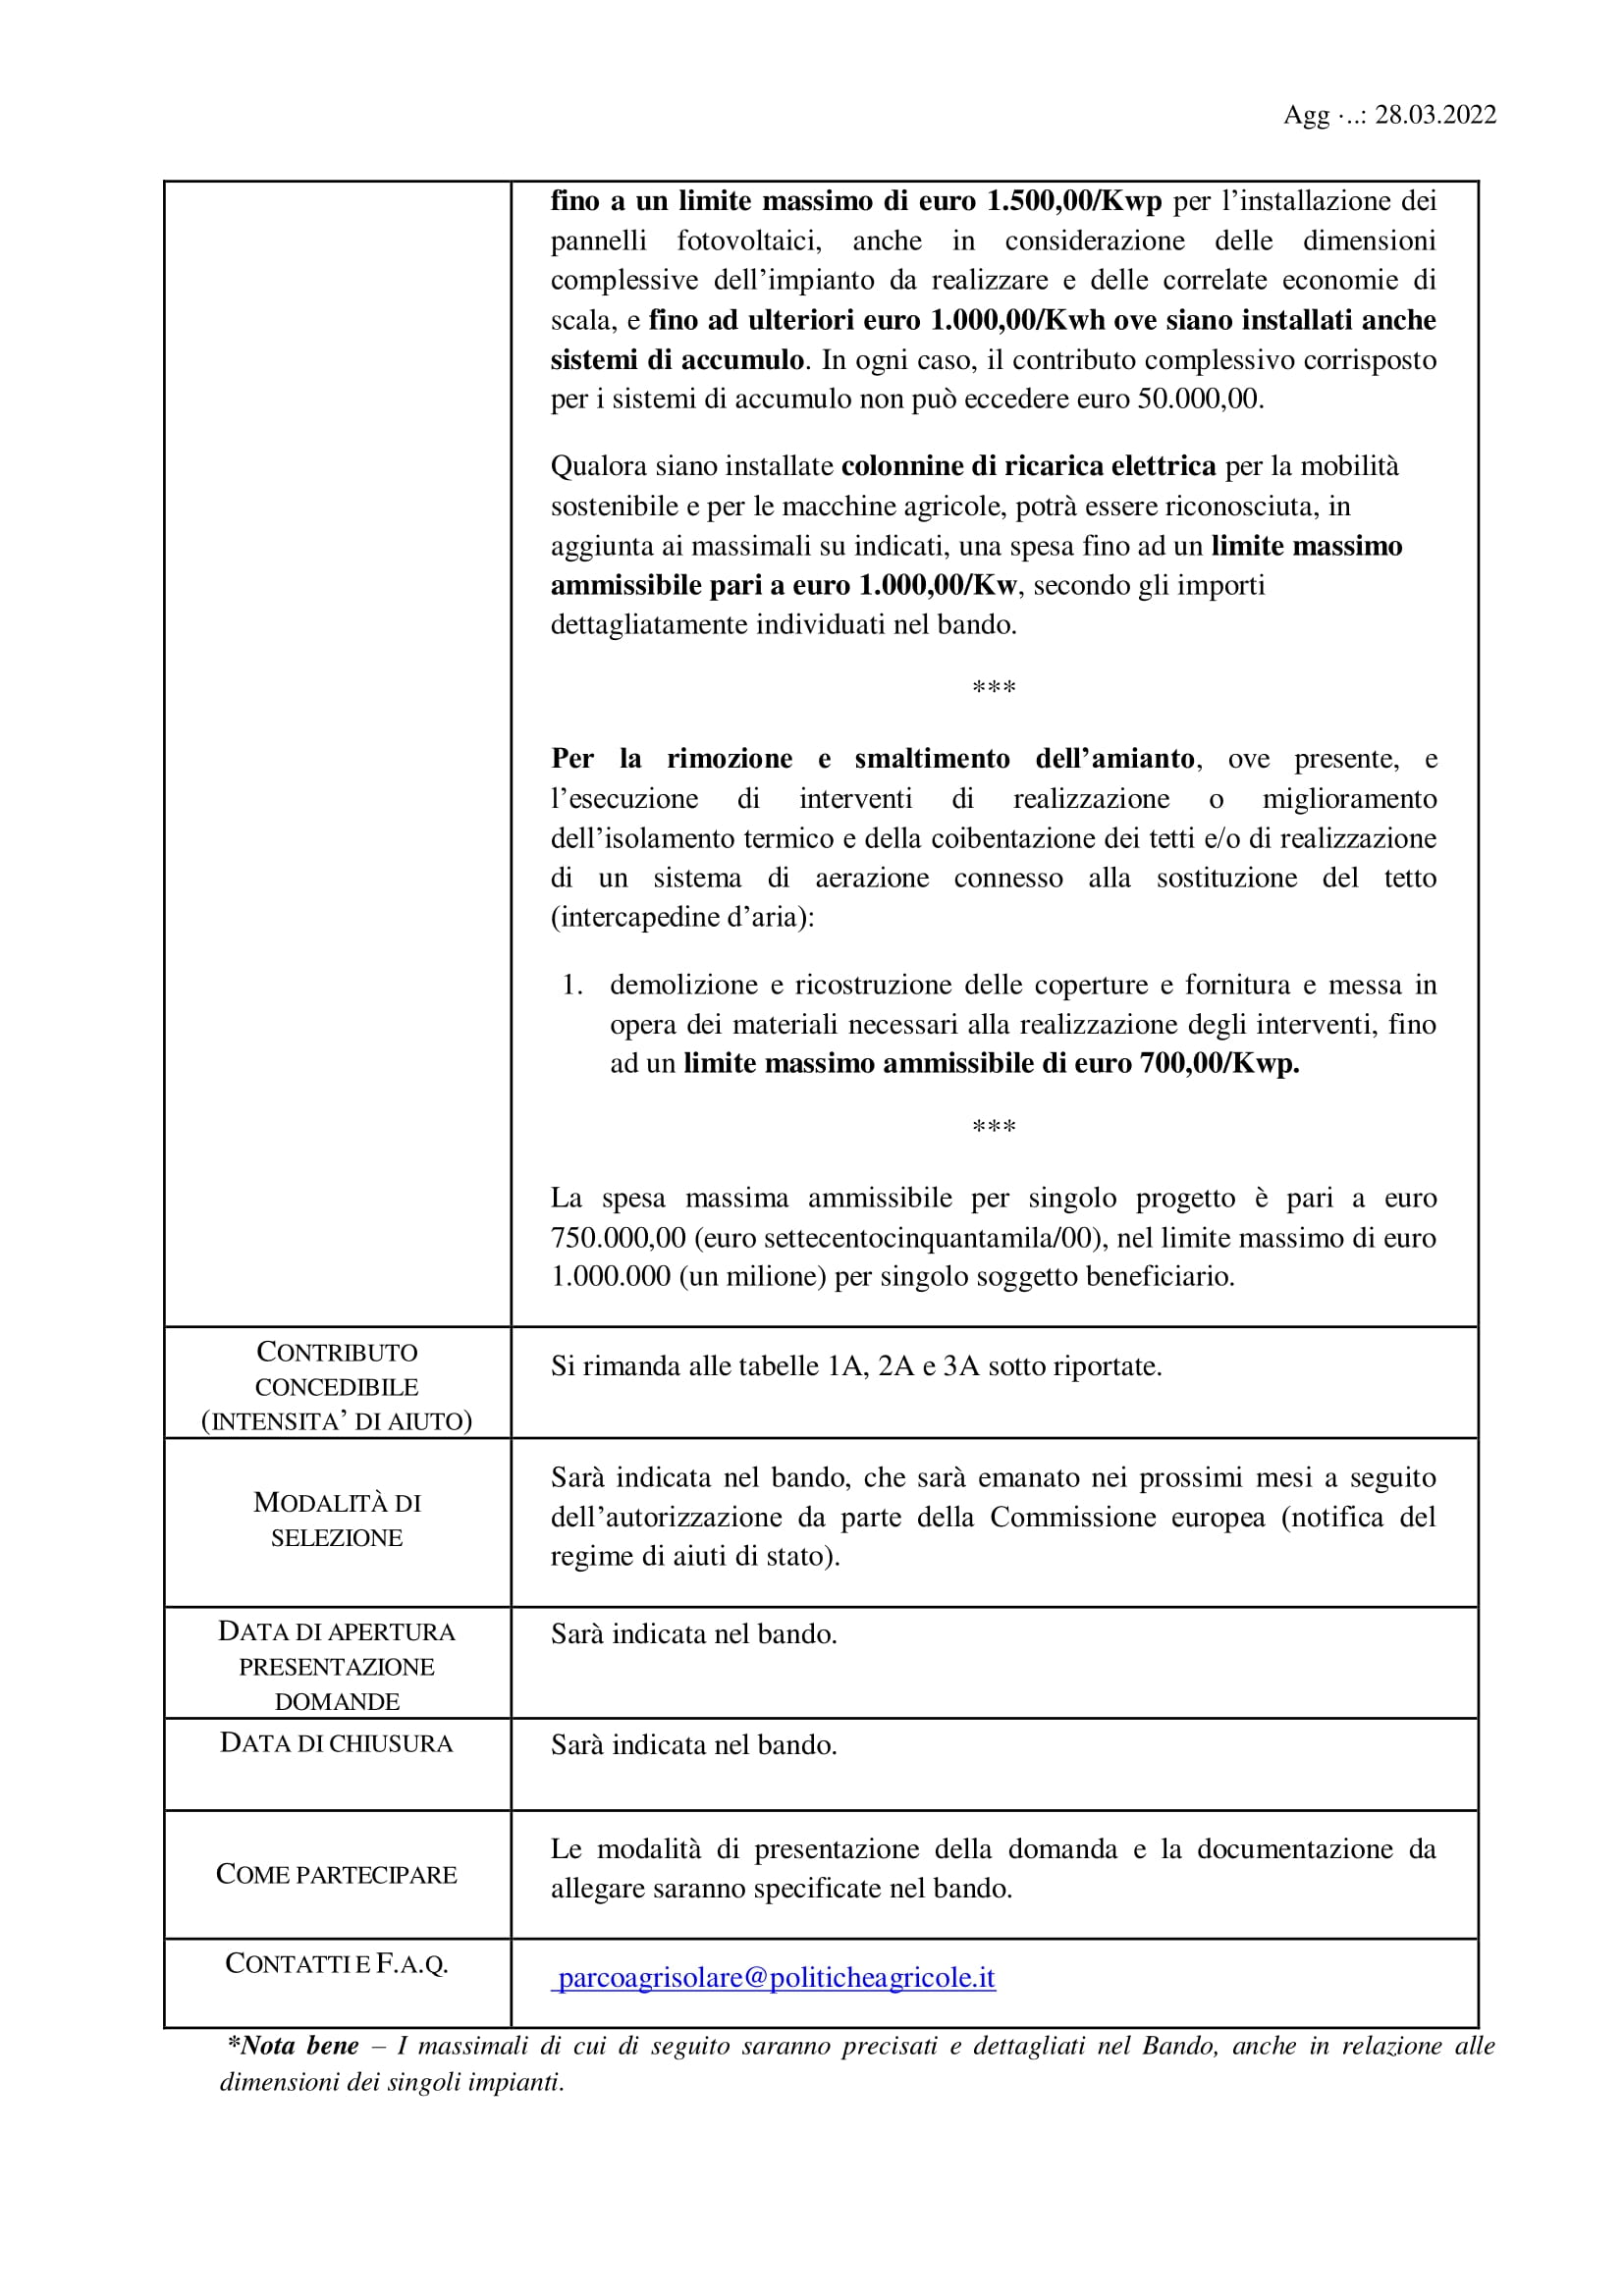 Scheda illustrativa Decreto Mipaaf Parco Agrisolare-3jpg